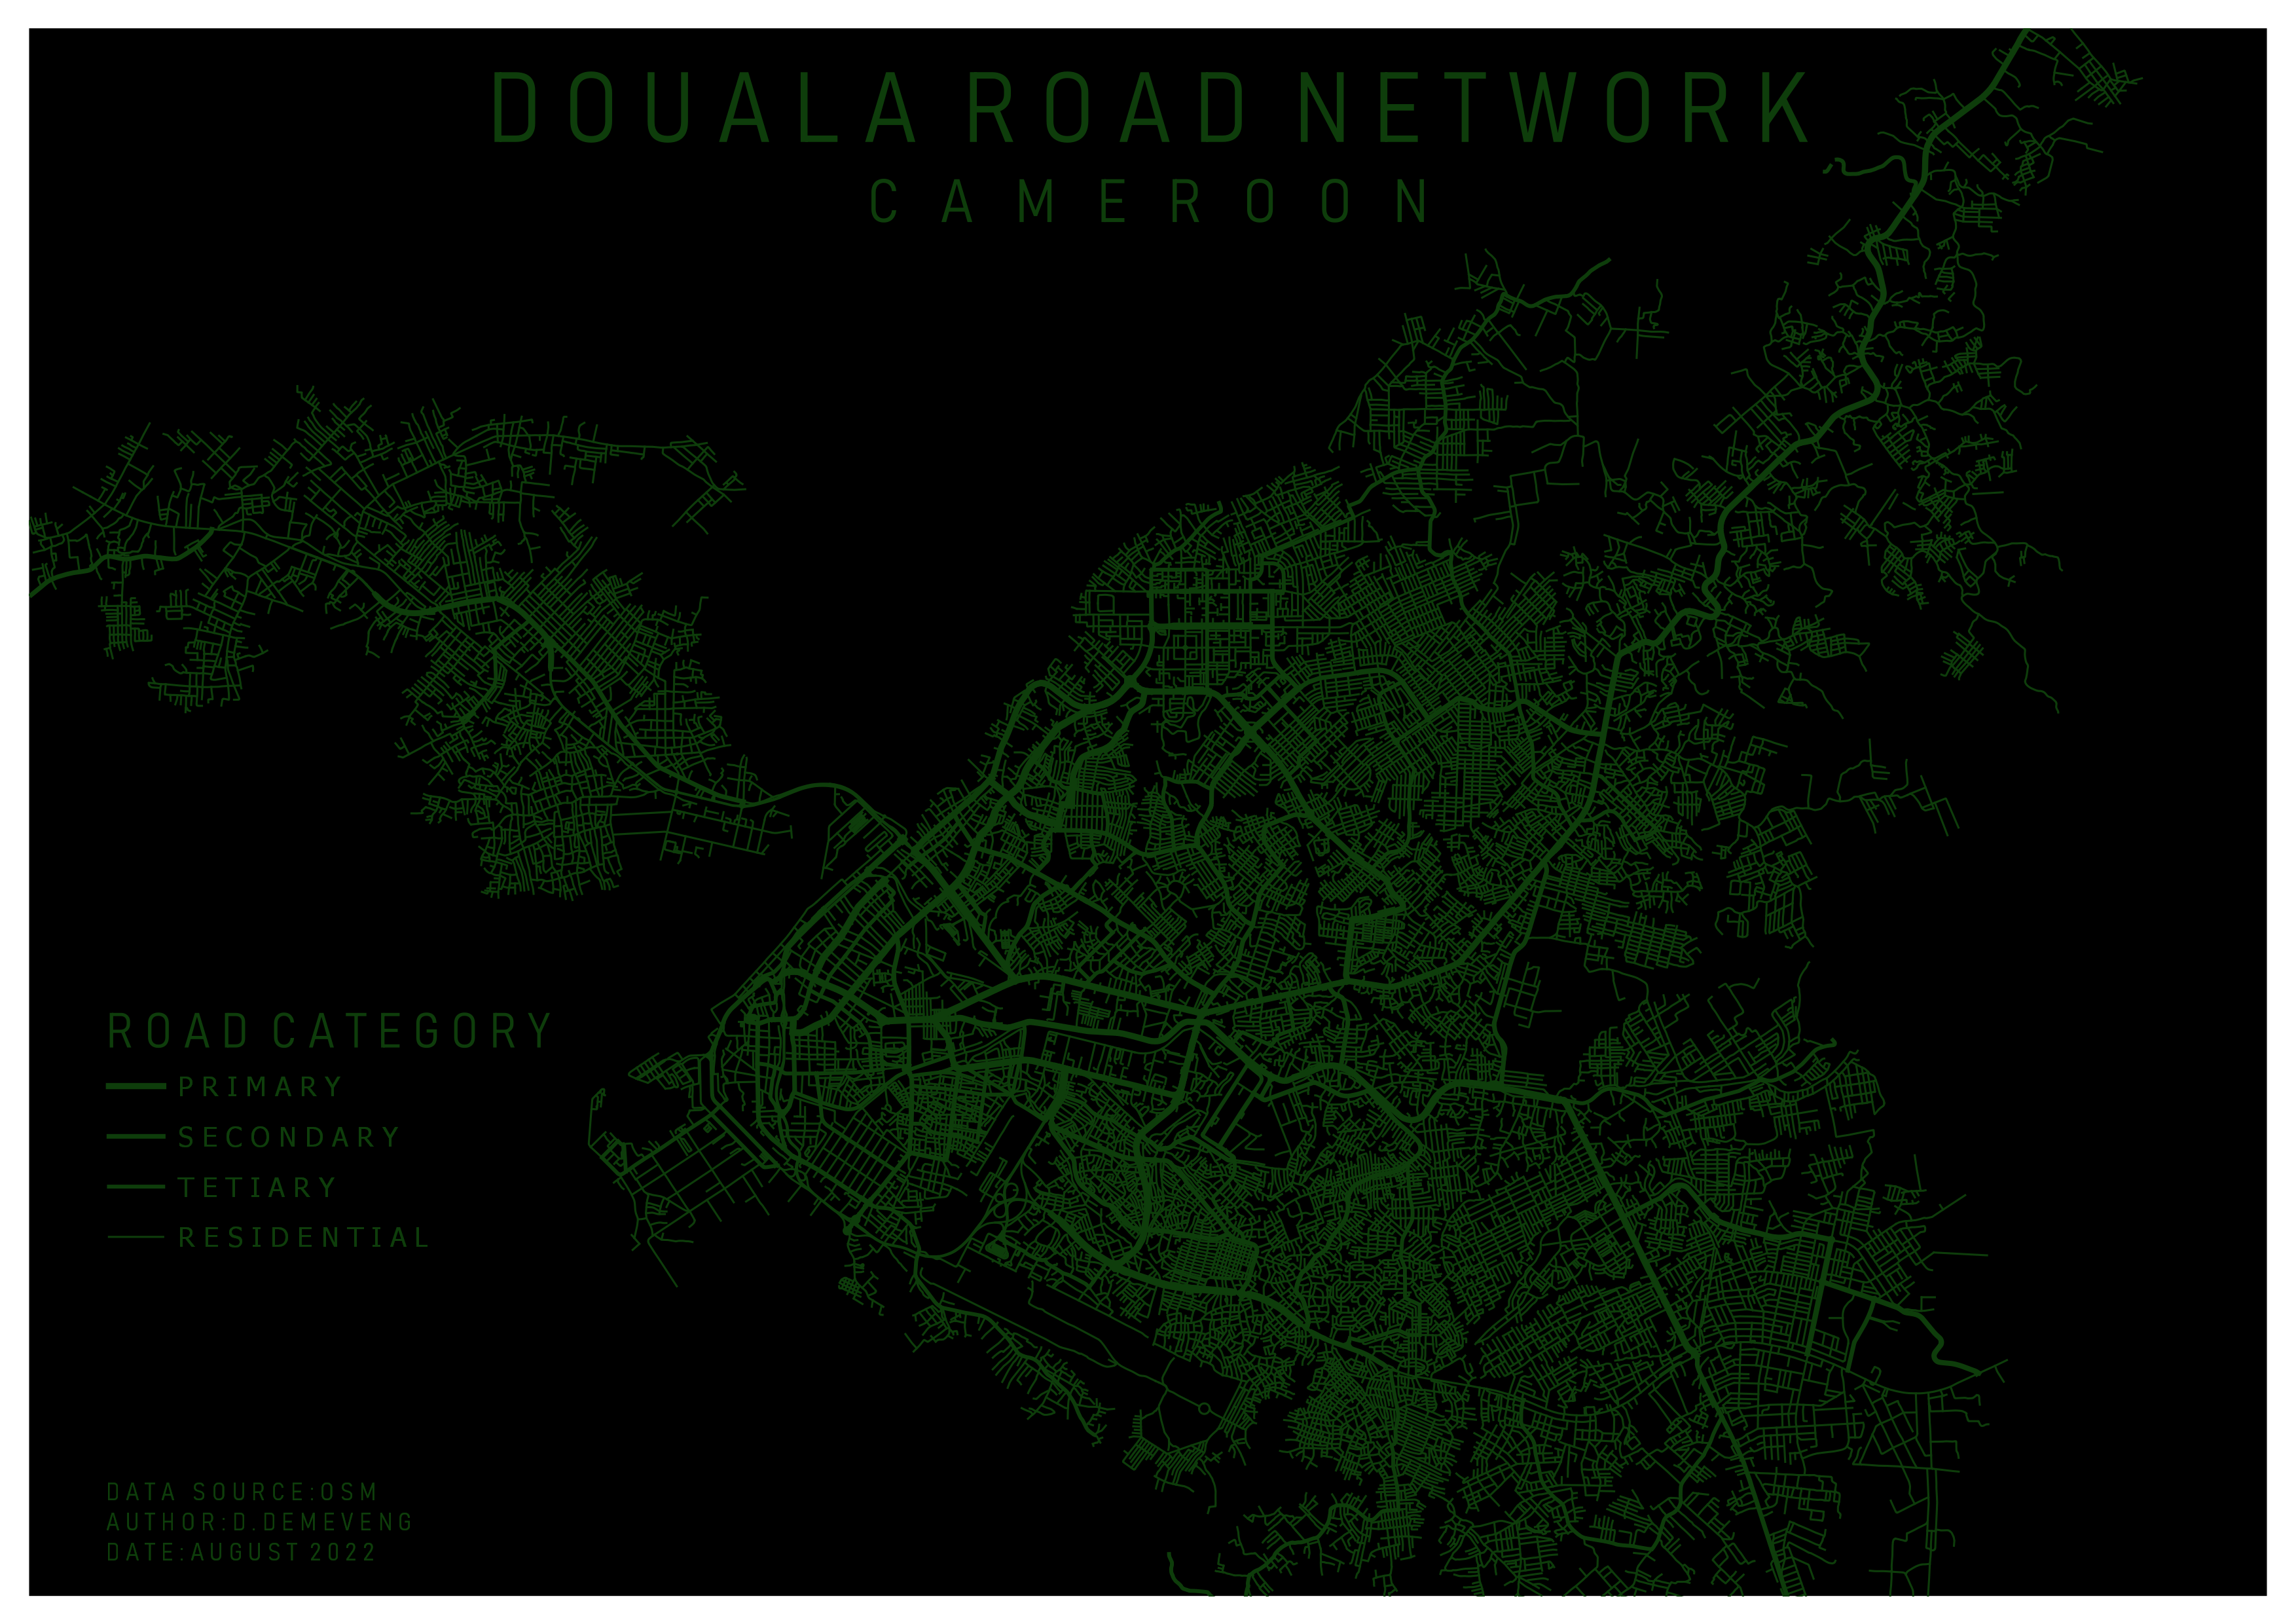 Douala Road network